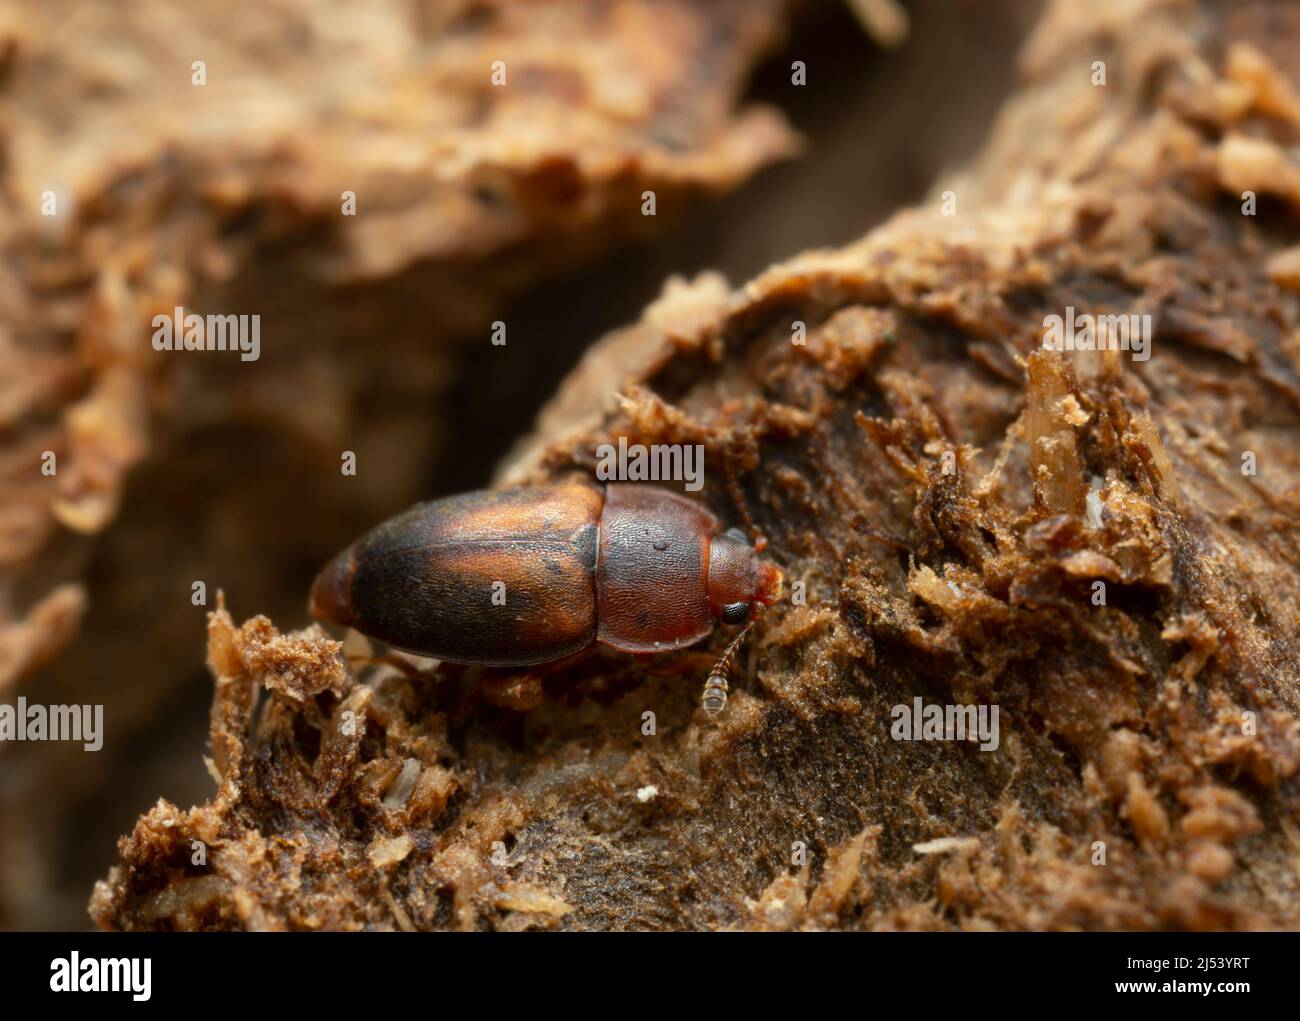 Sap beetle, Epuraea terminalis on aspen wood Stock Photo